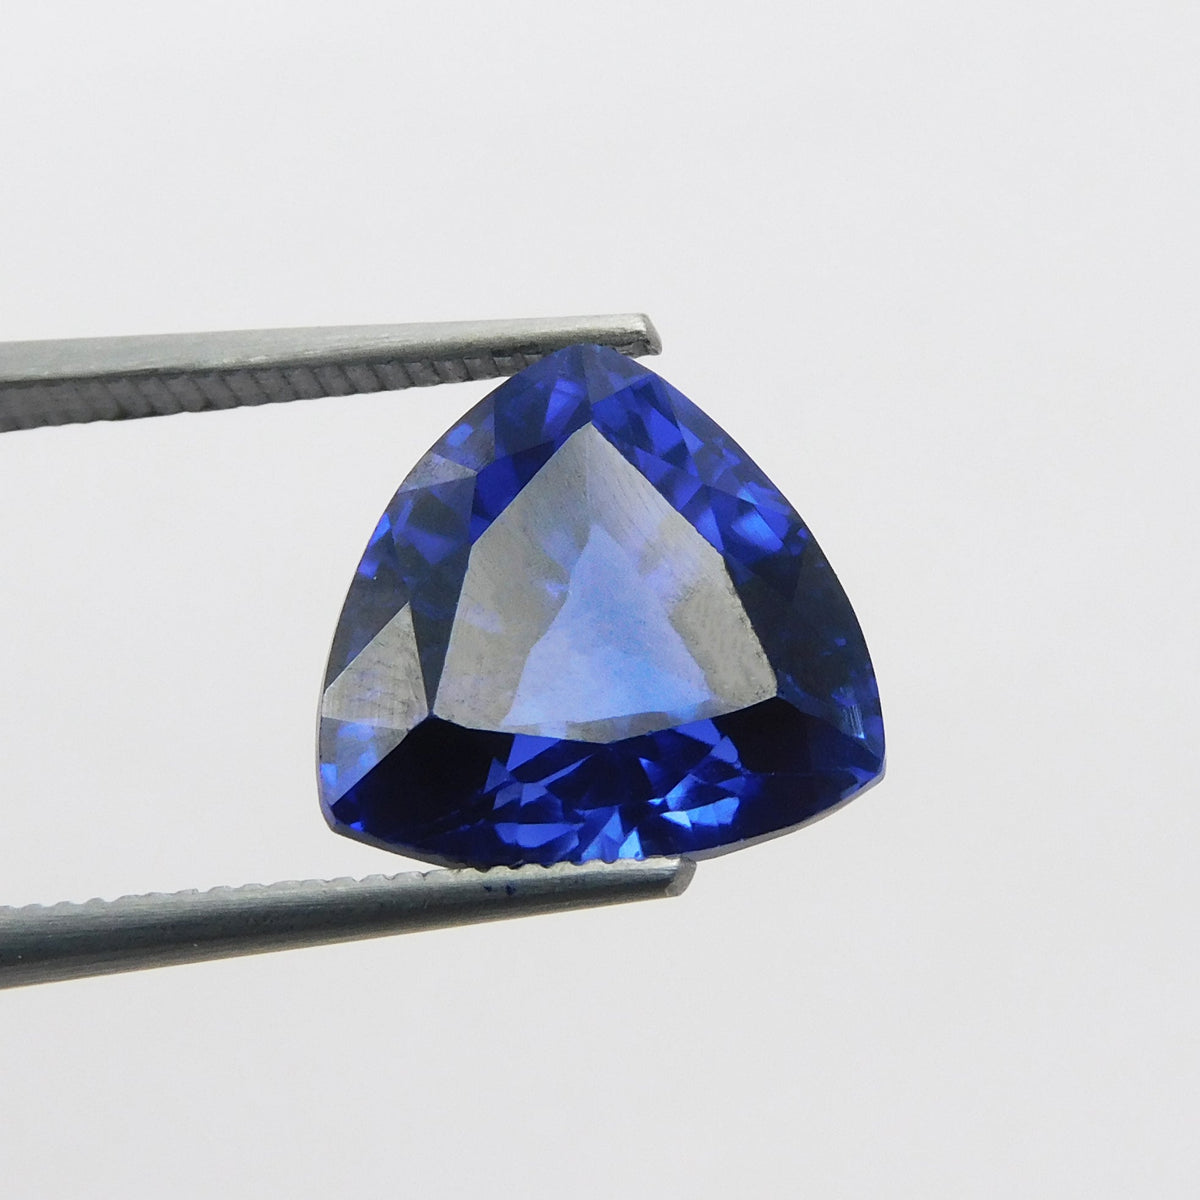 NATURAL Trillion Cut 10.54 Carat Dark BLUE Tanzanite CERTIFIED Ring Size Loose Gemstone | Tanzania's Best Beautiful Gemstone | Best For Protection